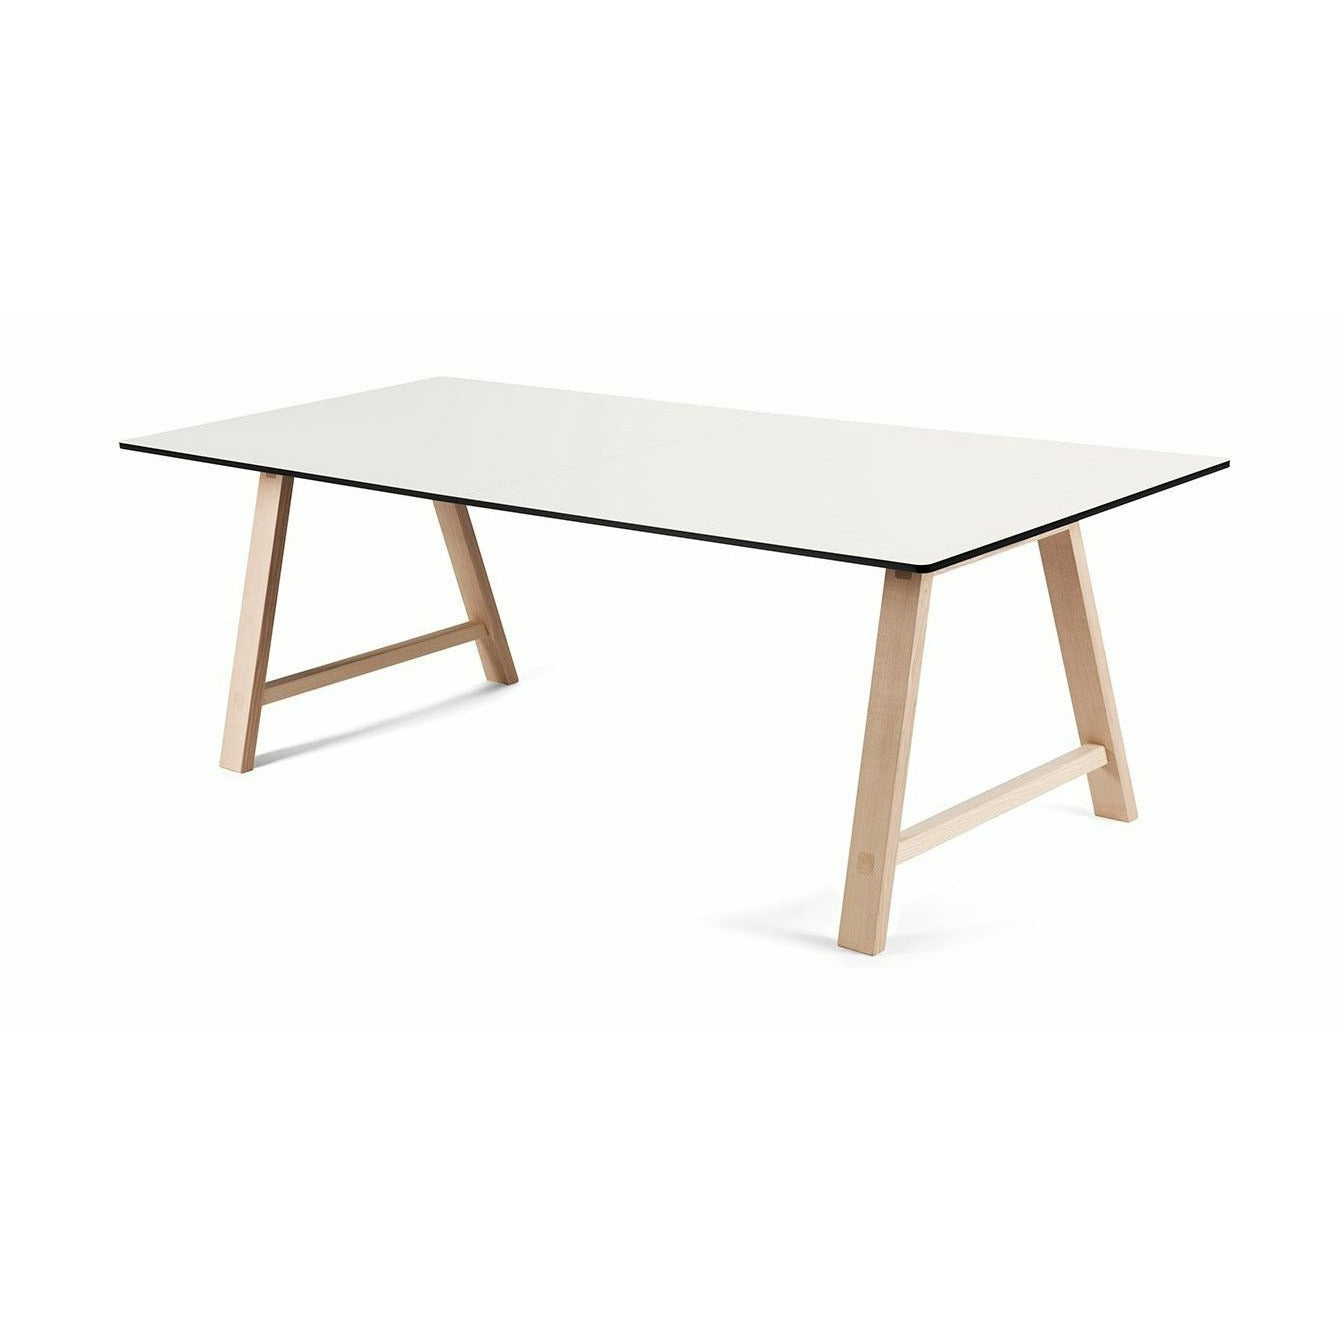 Andersen Furniture T1 Uitbreidbare tafel, wit laminaat, soaped eik, 220 cm